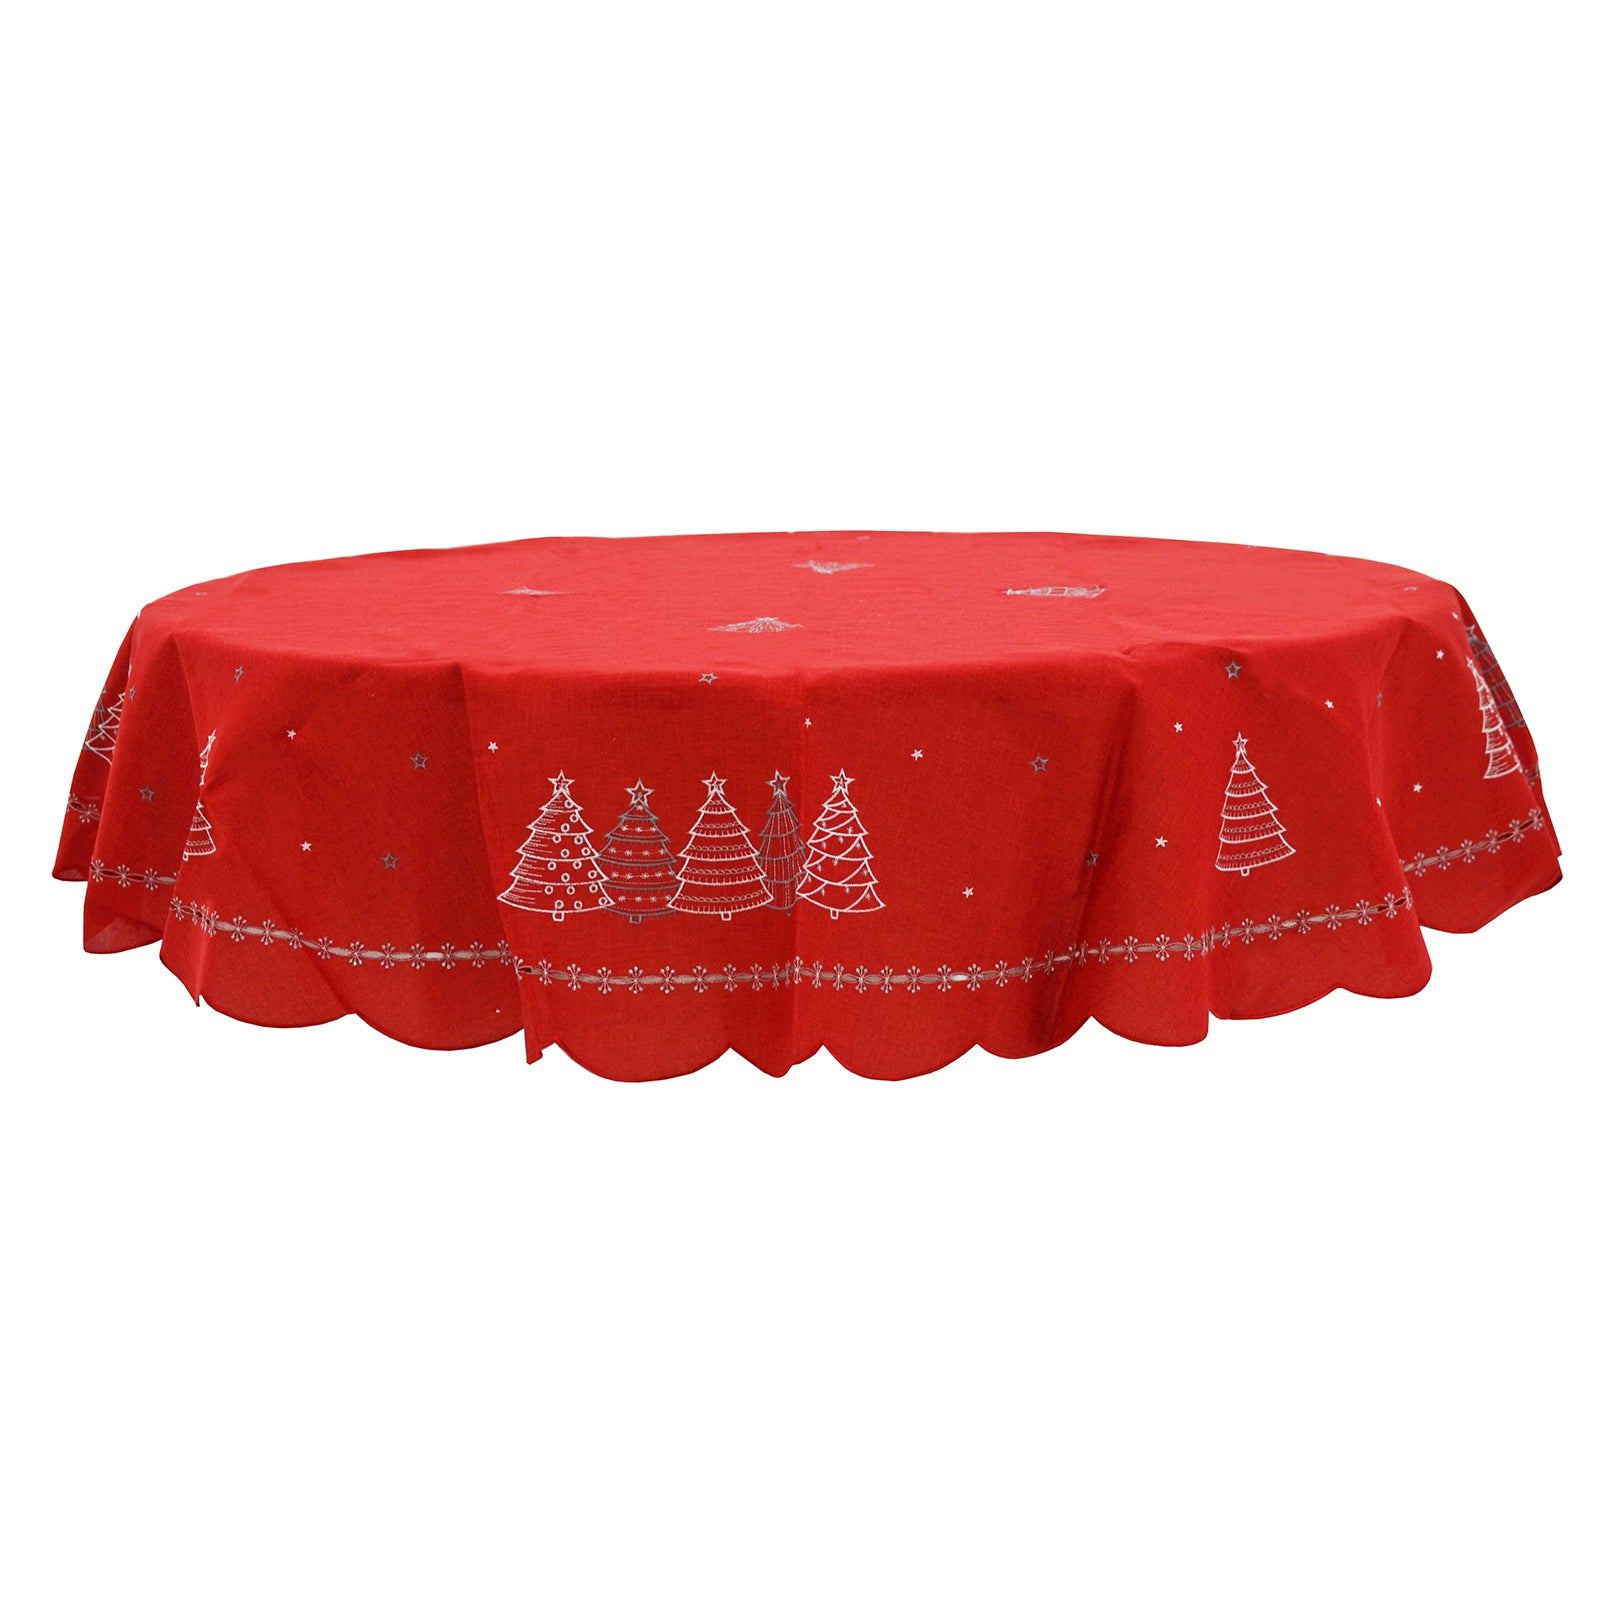 Mr Crimbo Red Christmas Tablecloth Napkins Silver Tree Stars - MrCrimbo.co.uk -XS6570 - 70" Round -christmas napkins